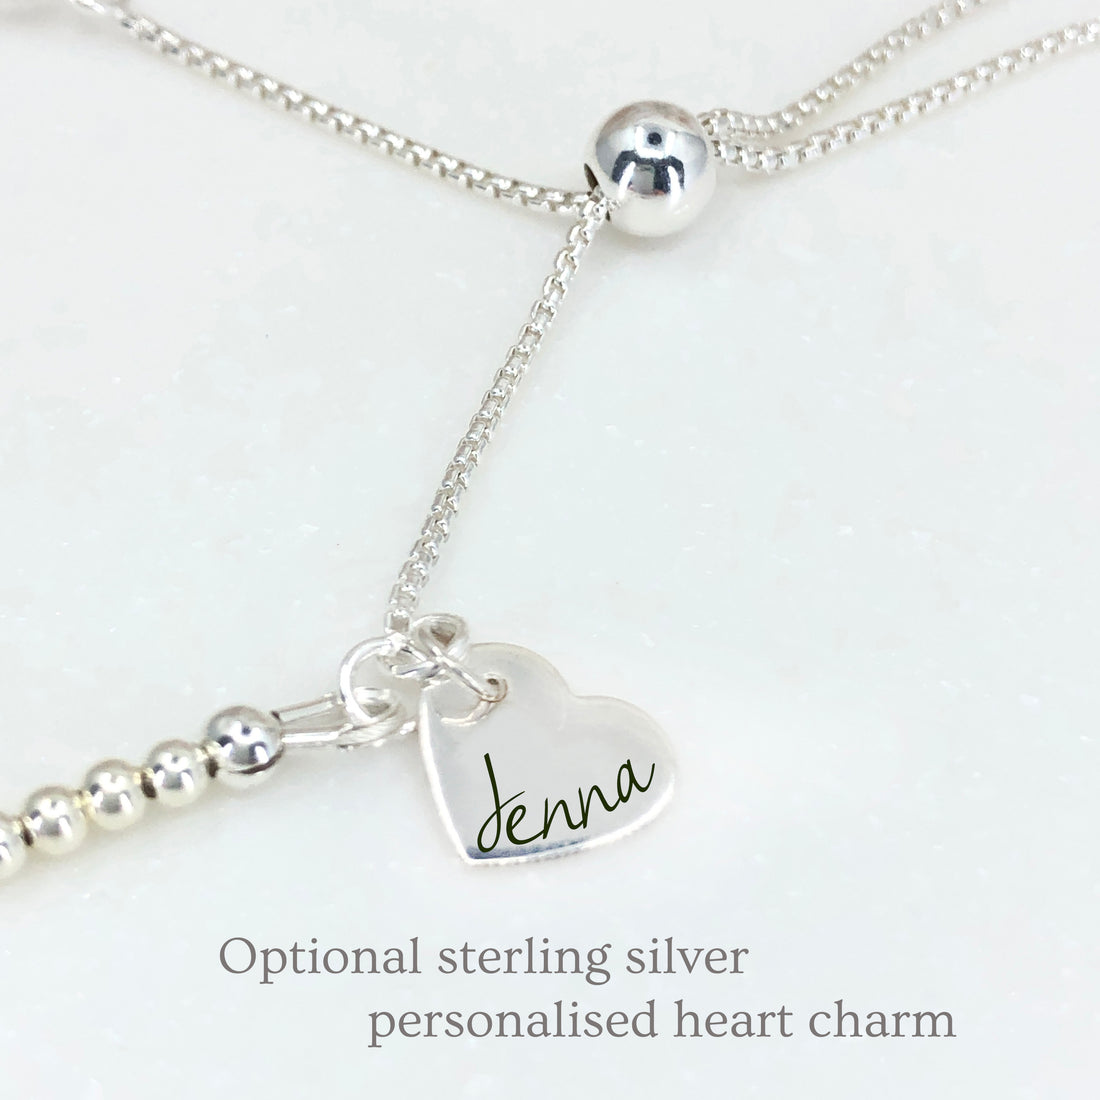 Amethyst sterling silver adjustable beaded gemstone | February birthstone bracelet